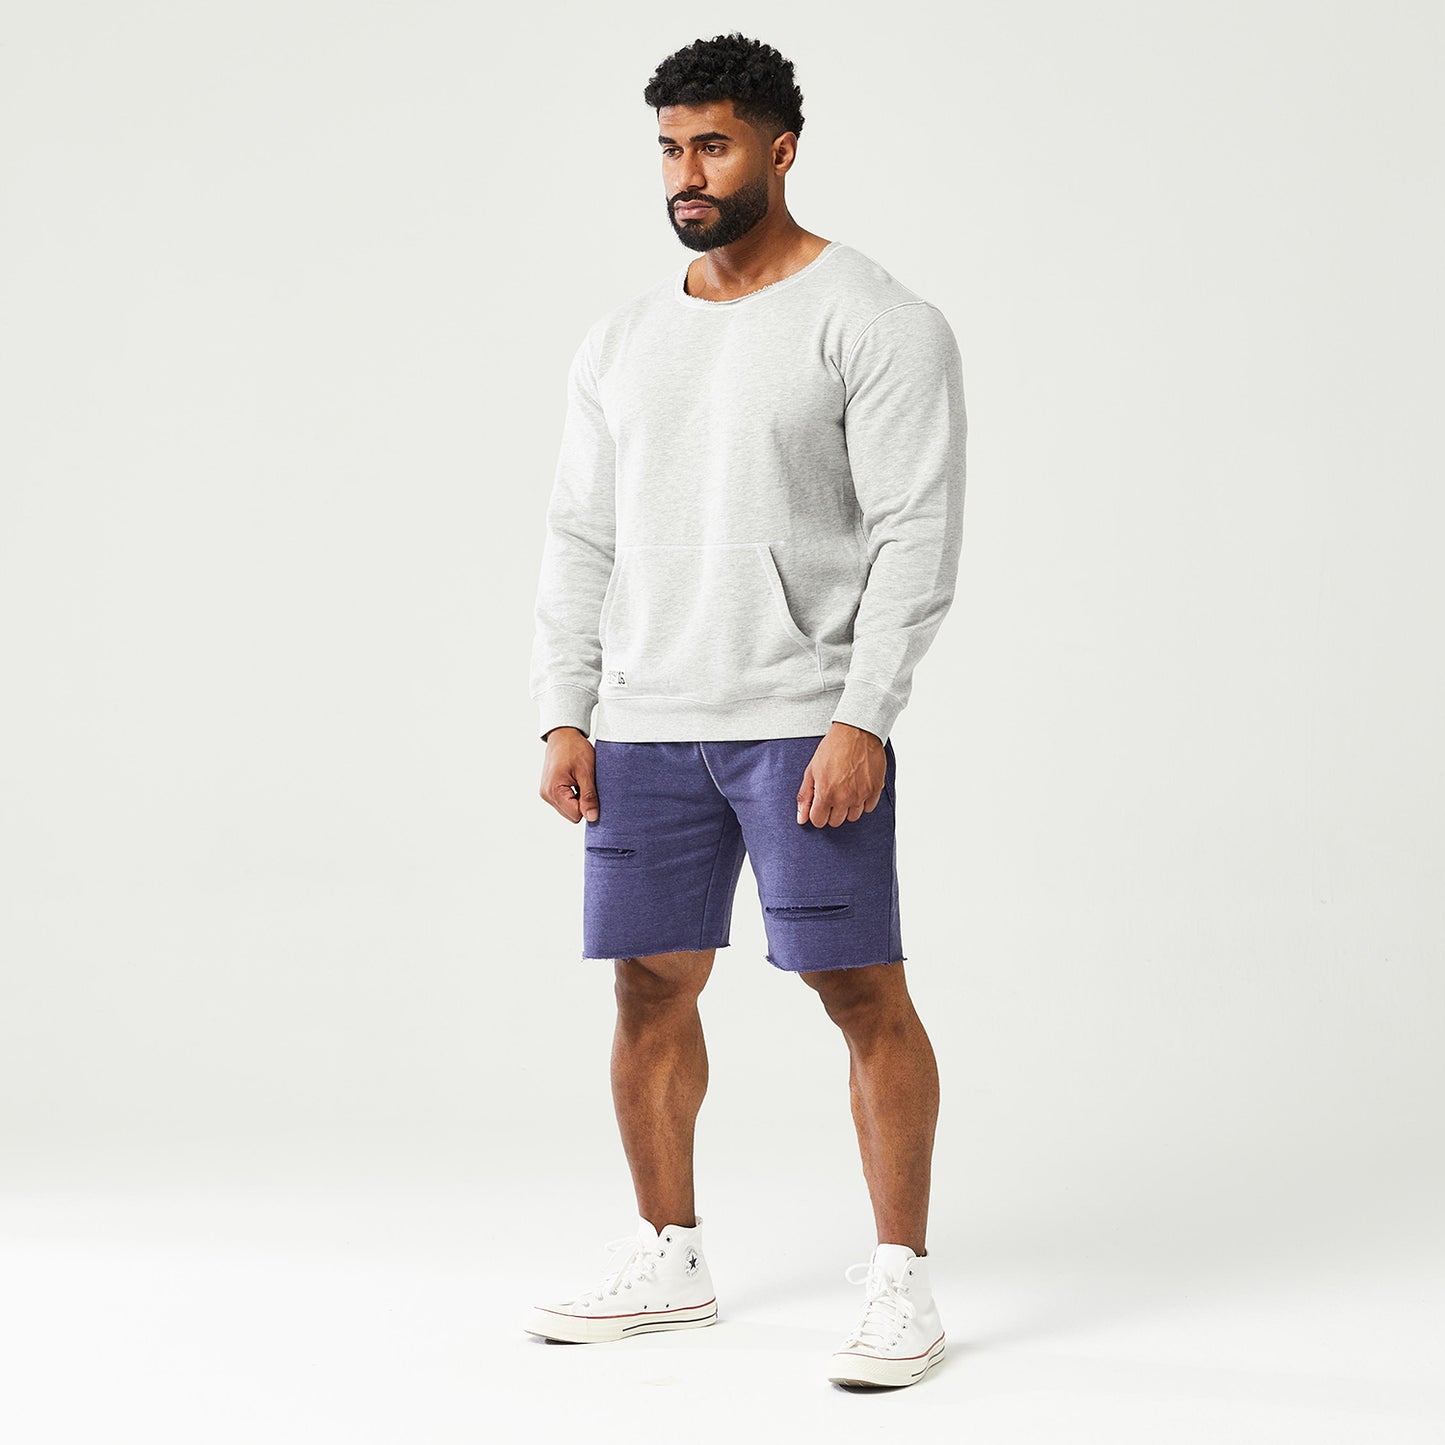 squatwolf-gym-wear-golden-era-crew-sweatshirt-grey-marl-workout-hoodies-for-men